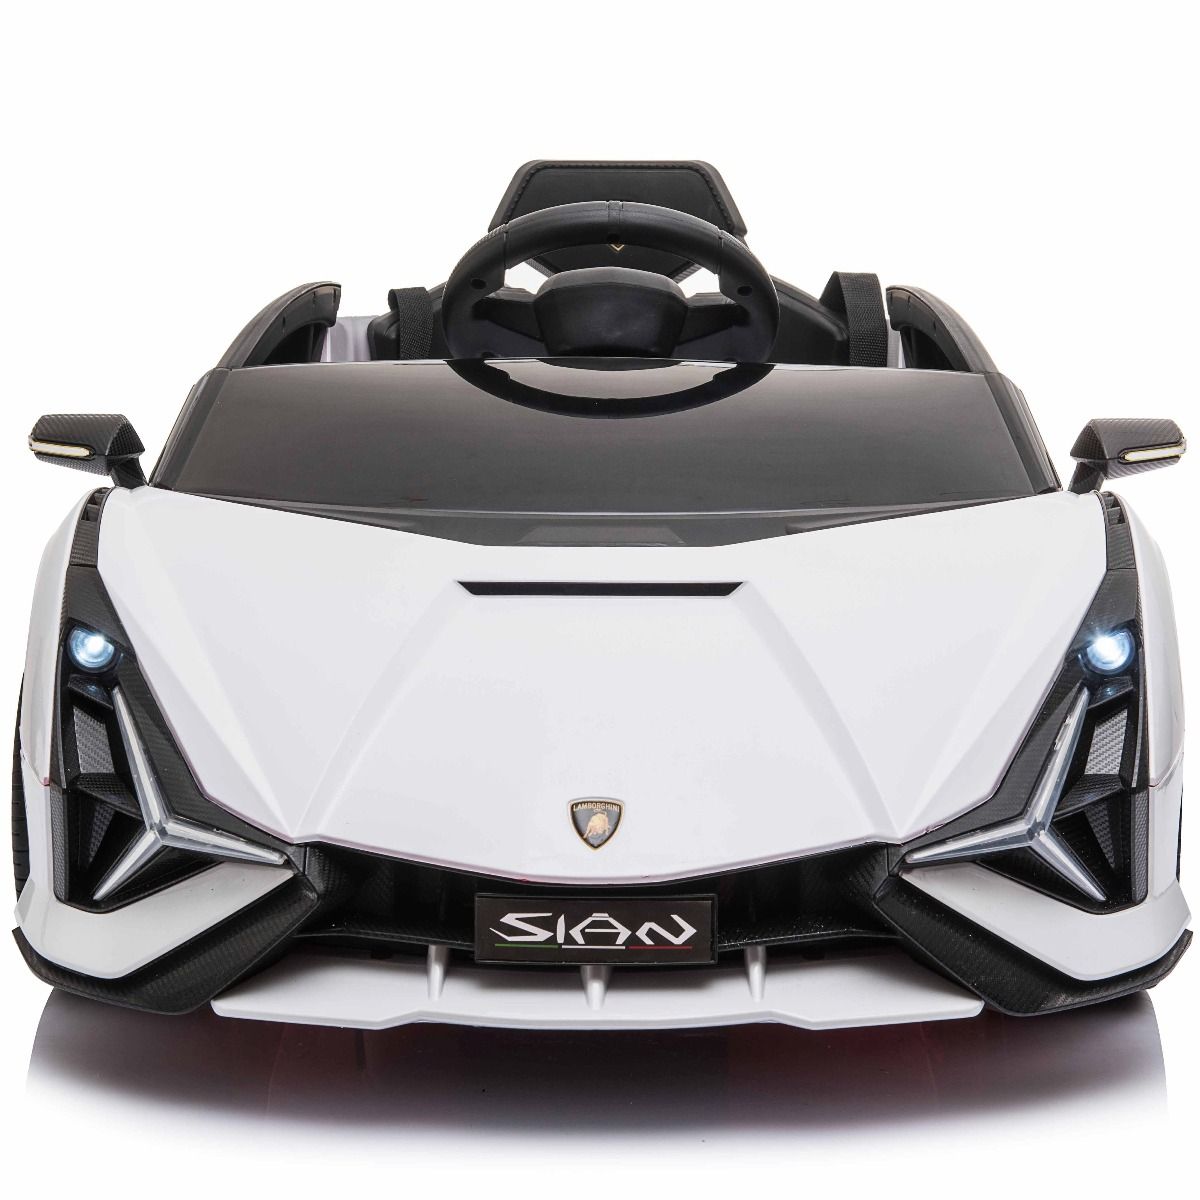 "White and black 12V Lamborghini Sian child's car with MP4 screen and parental control."